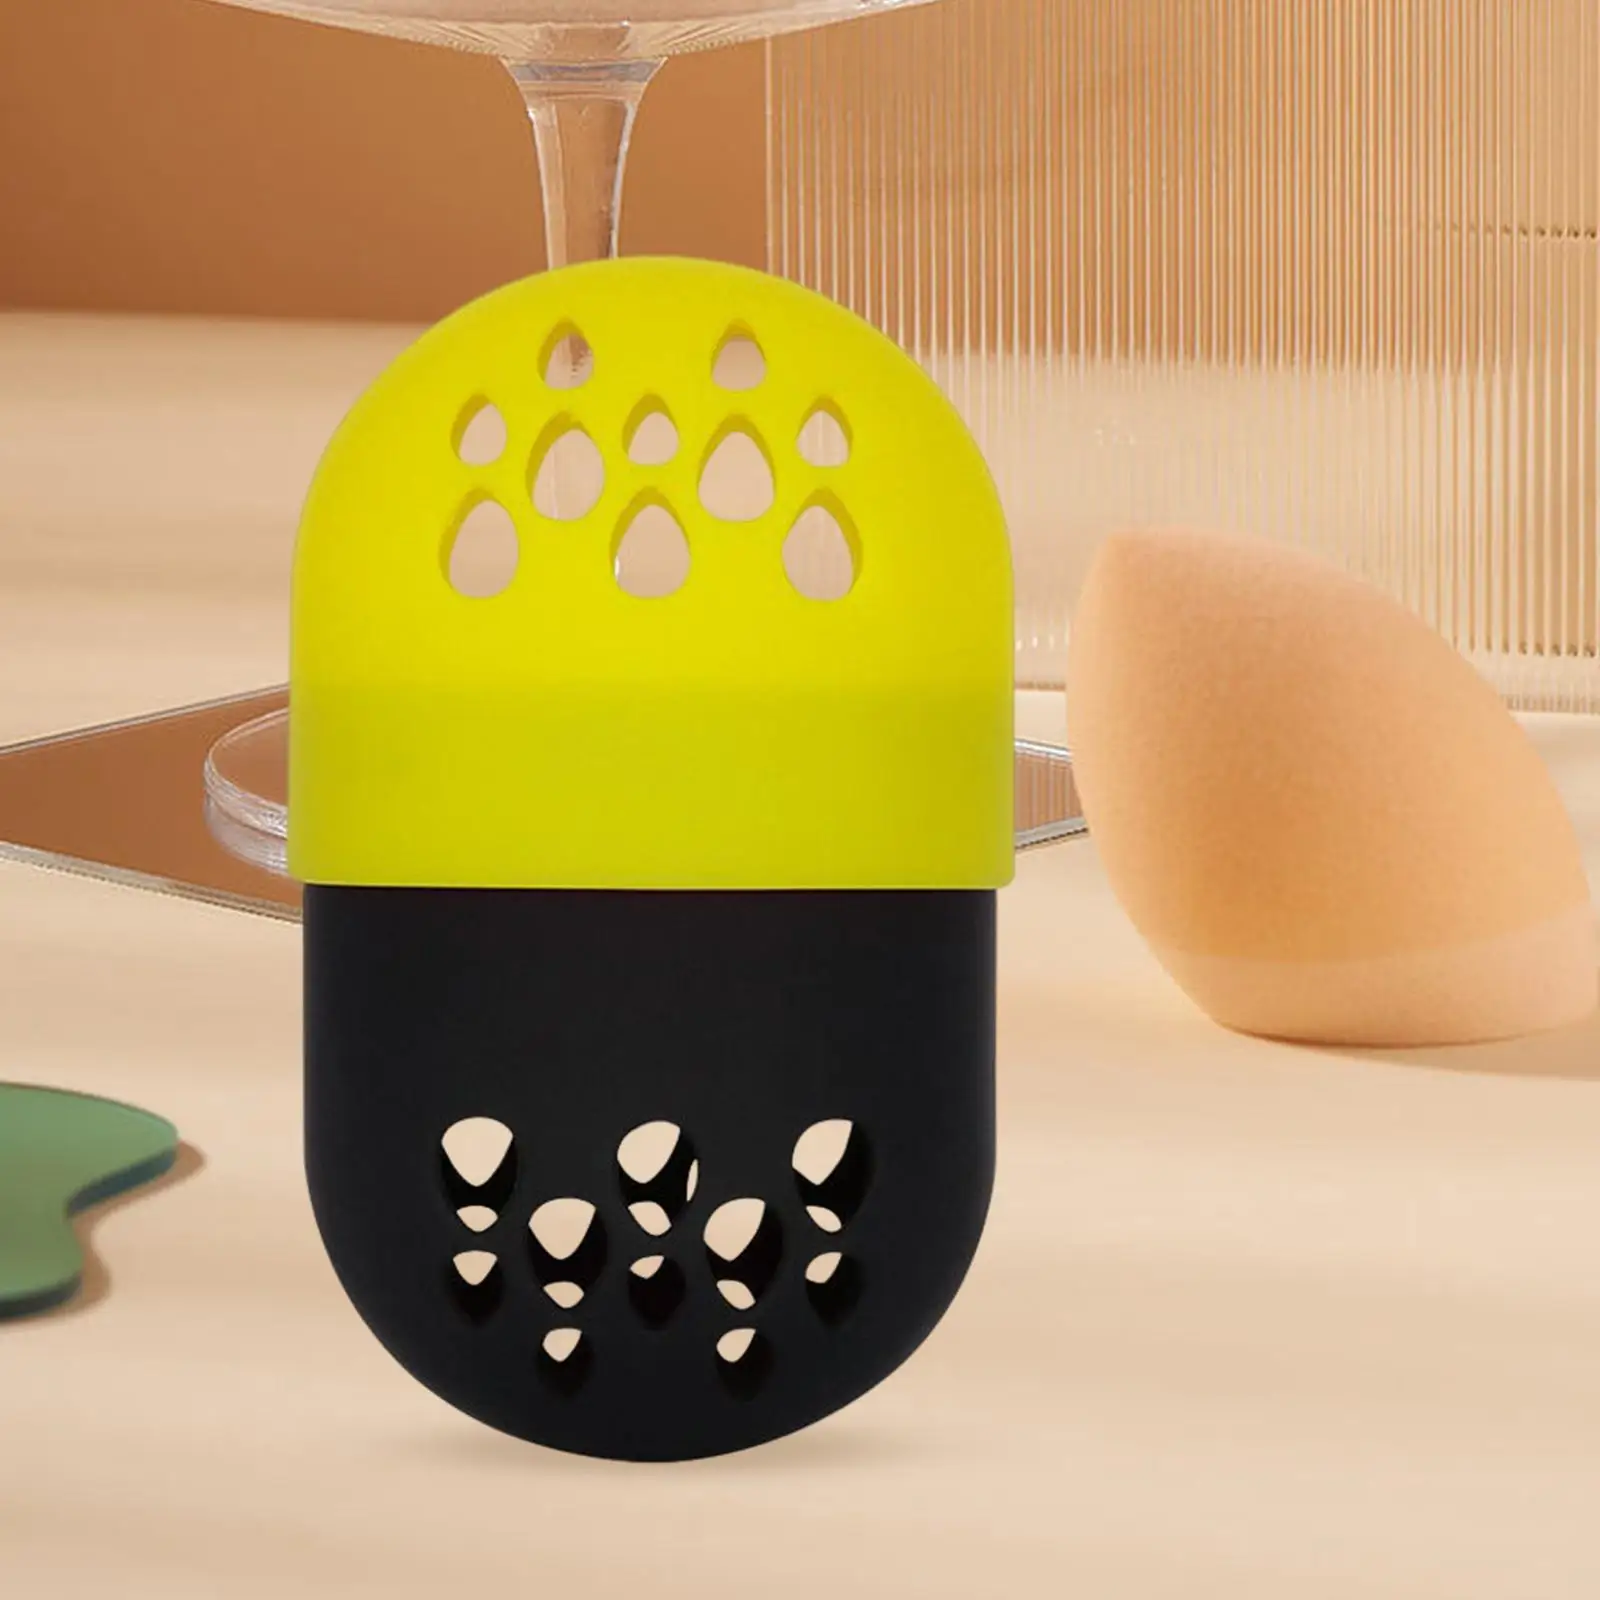 Portable Travel Makeup Sponge Holder Shatterproof Dustproof Silicone Make up Egg Storage Box Beauty Sponge Carrying Case